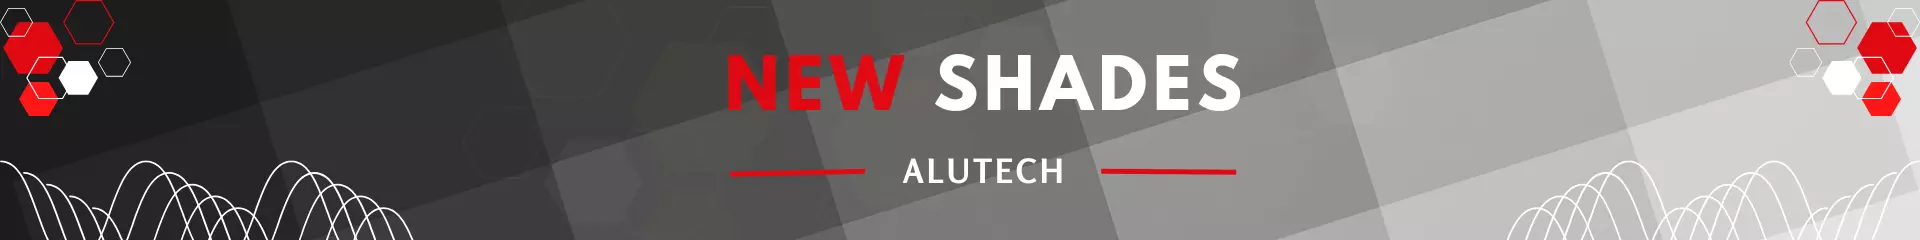 New Shades ALutech